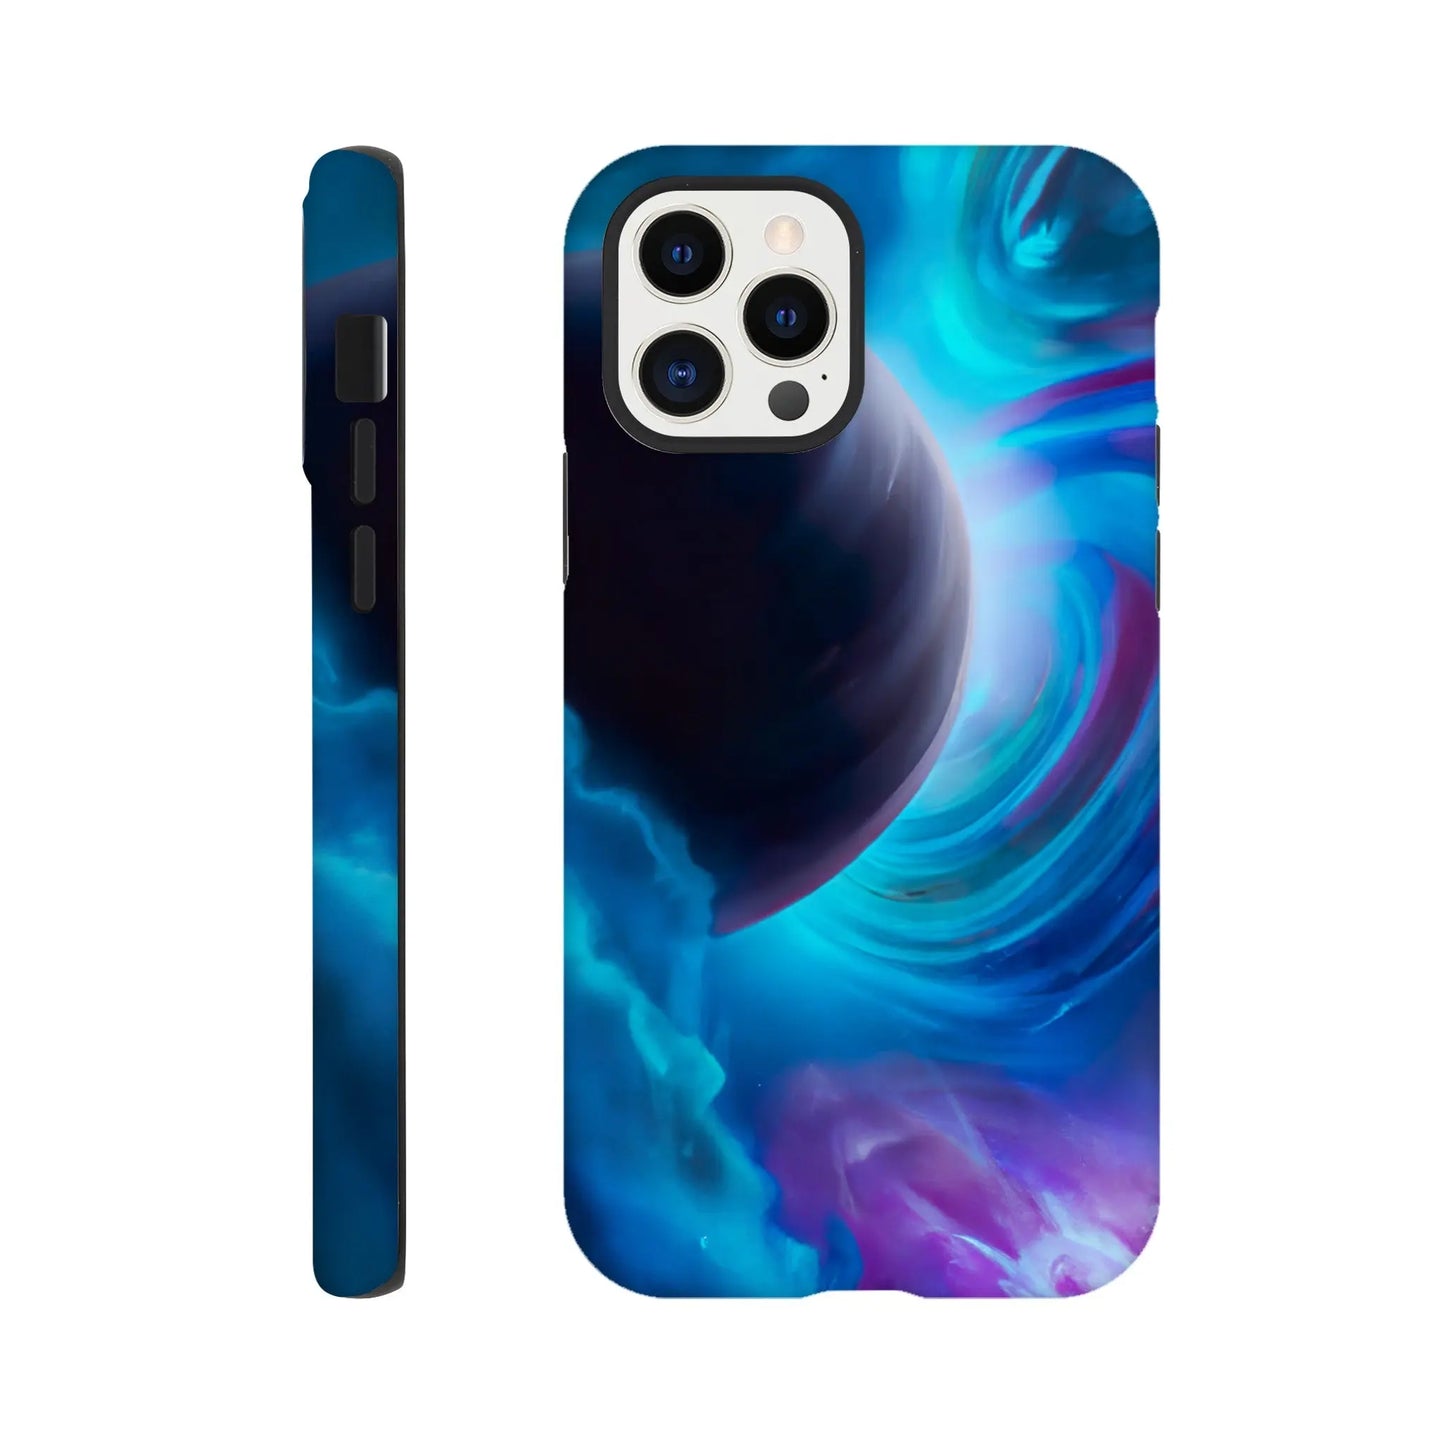 Smartphone-Hülle "Hart" - Weltraum - Malerischer Stil, KI-Kunst RolConArt, Sci-Fi, iPhone-12-Pro